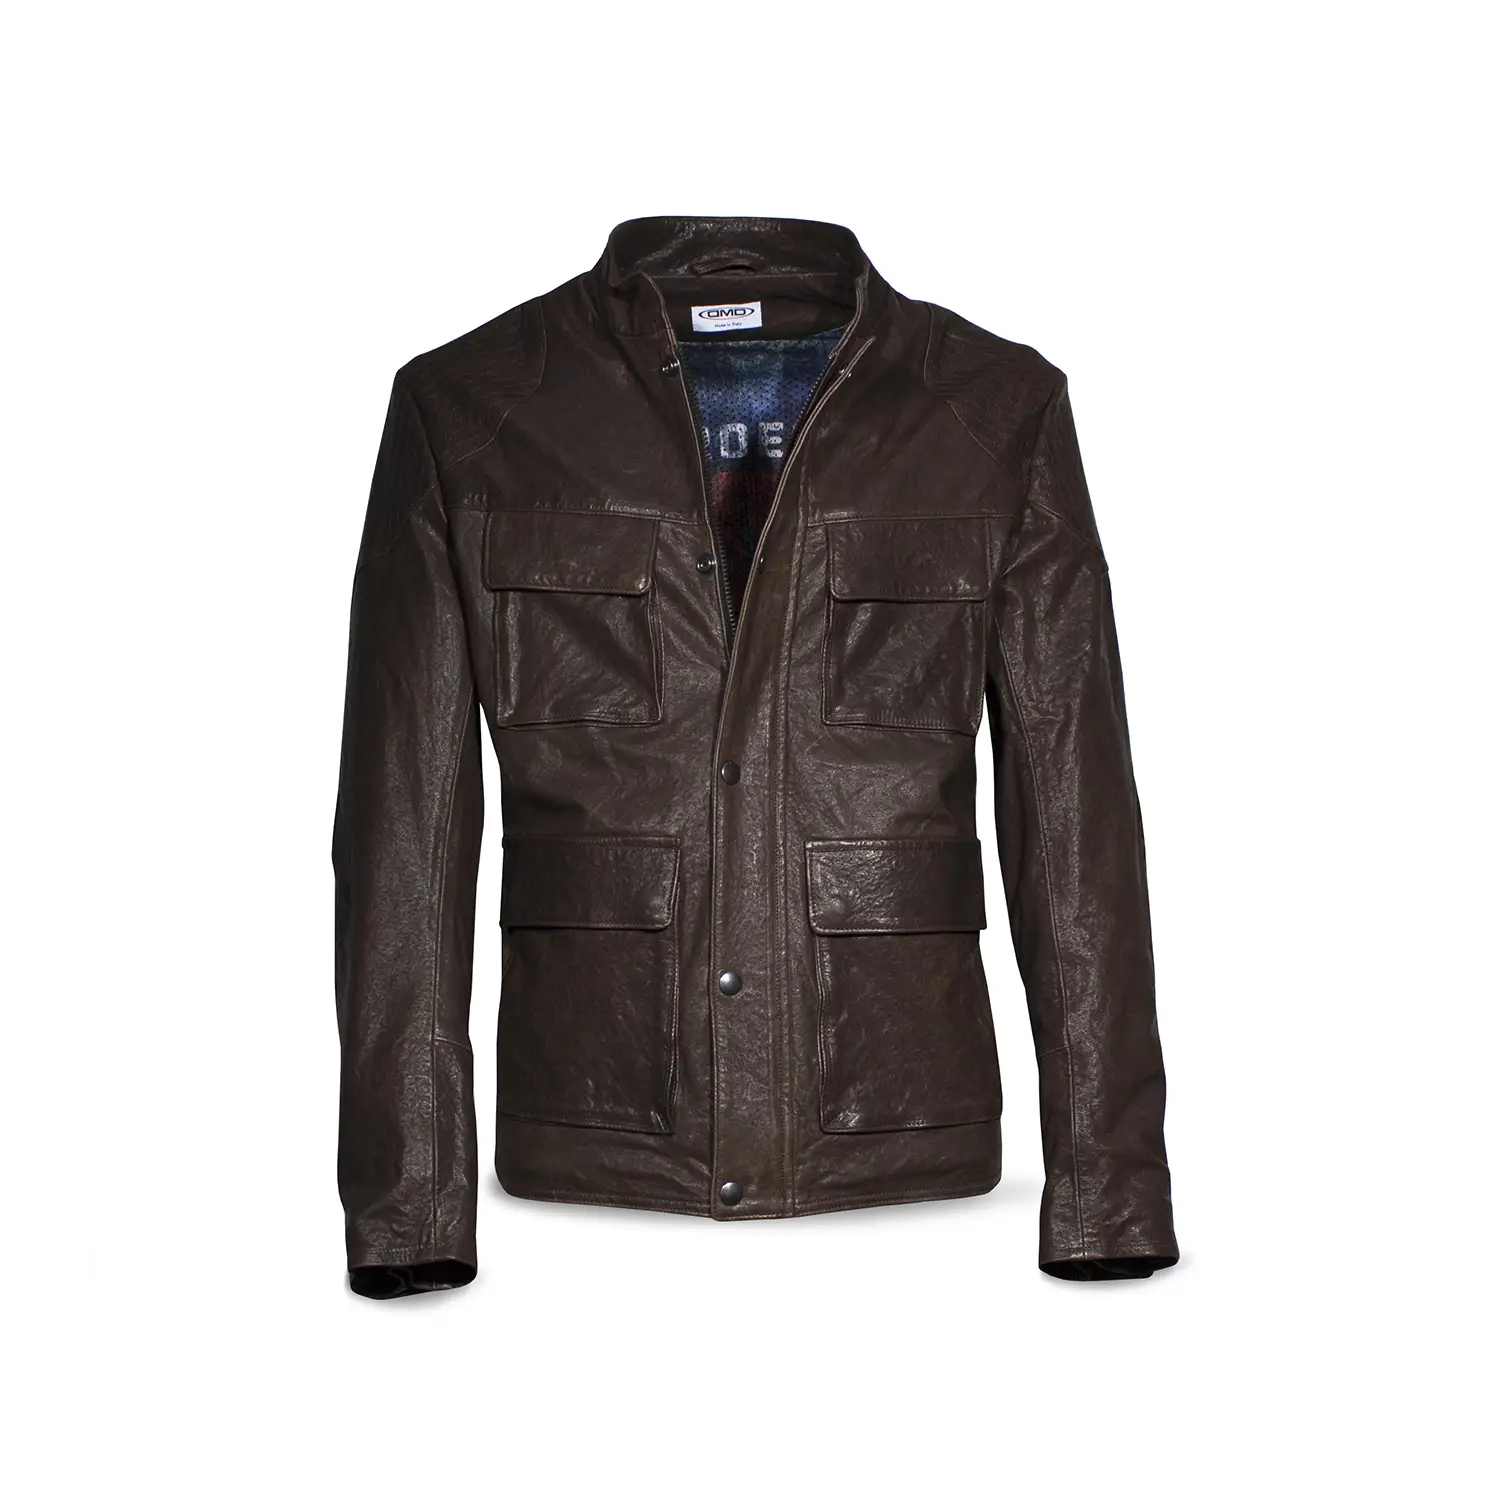 dmd.eu - SOLO RIDER BROWN (NICHT GENEHMIGT) DMD – Solo Rider Brown Leather (non omologata) – front